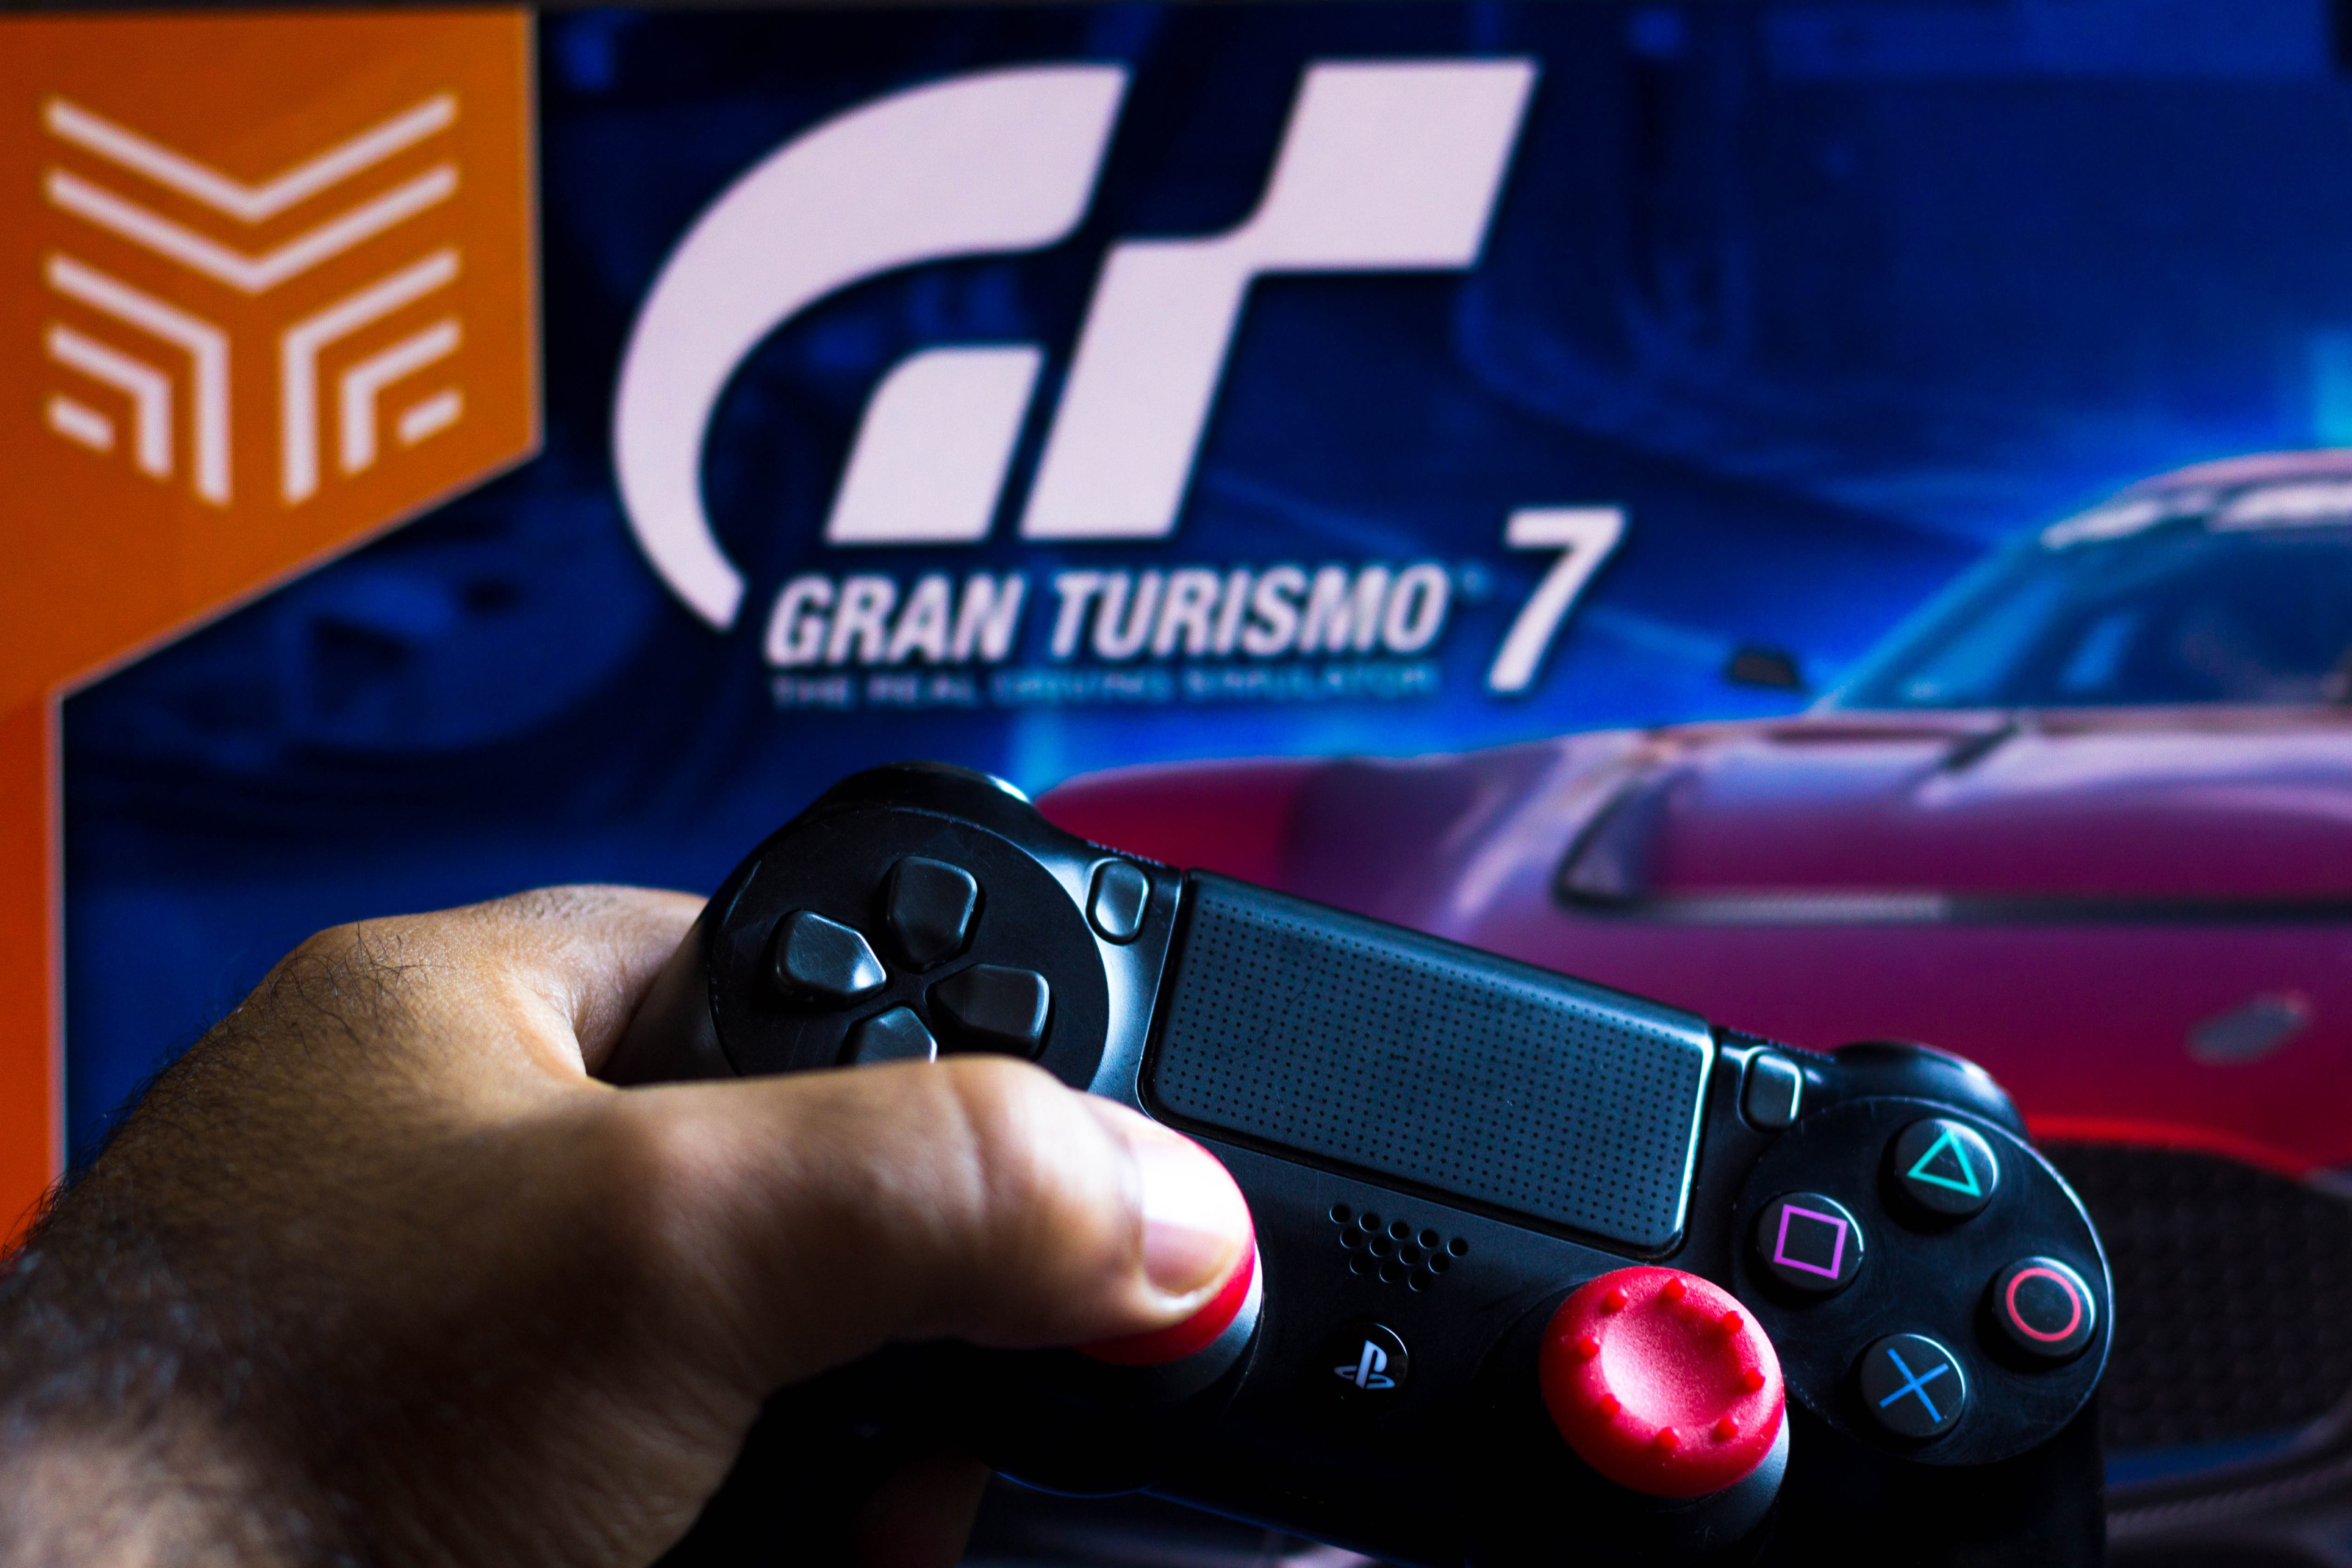 Gran Turismo 7 physical edition pre-order starts Jan 7 - GadgetMatch, gran  turismo 7 requisitos 